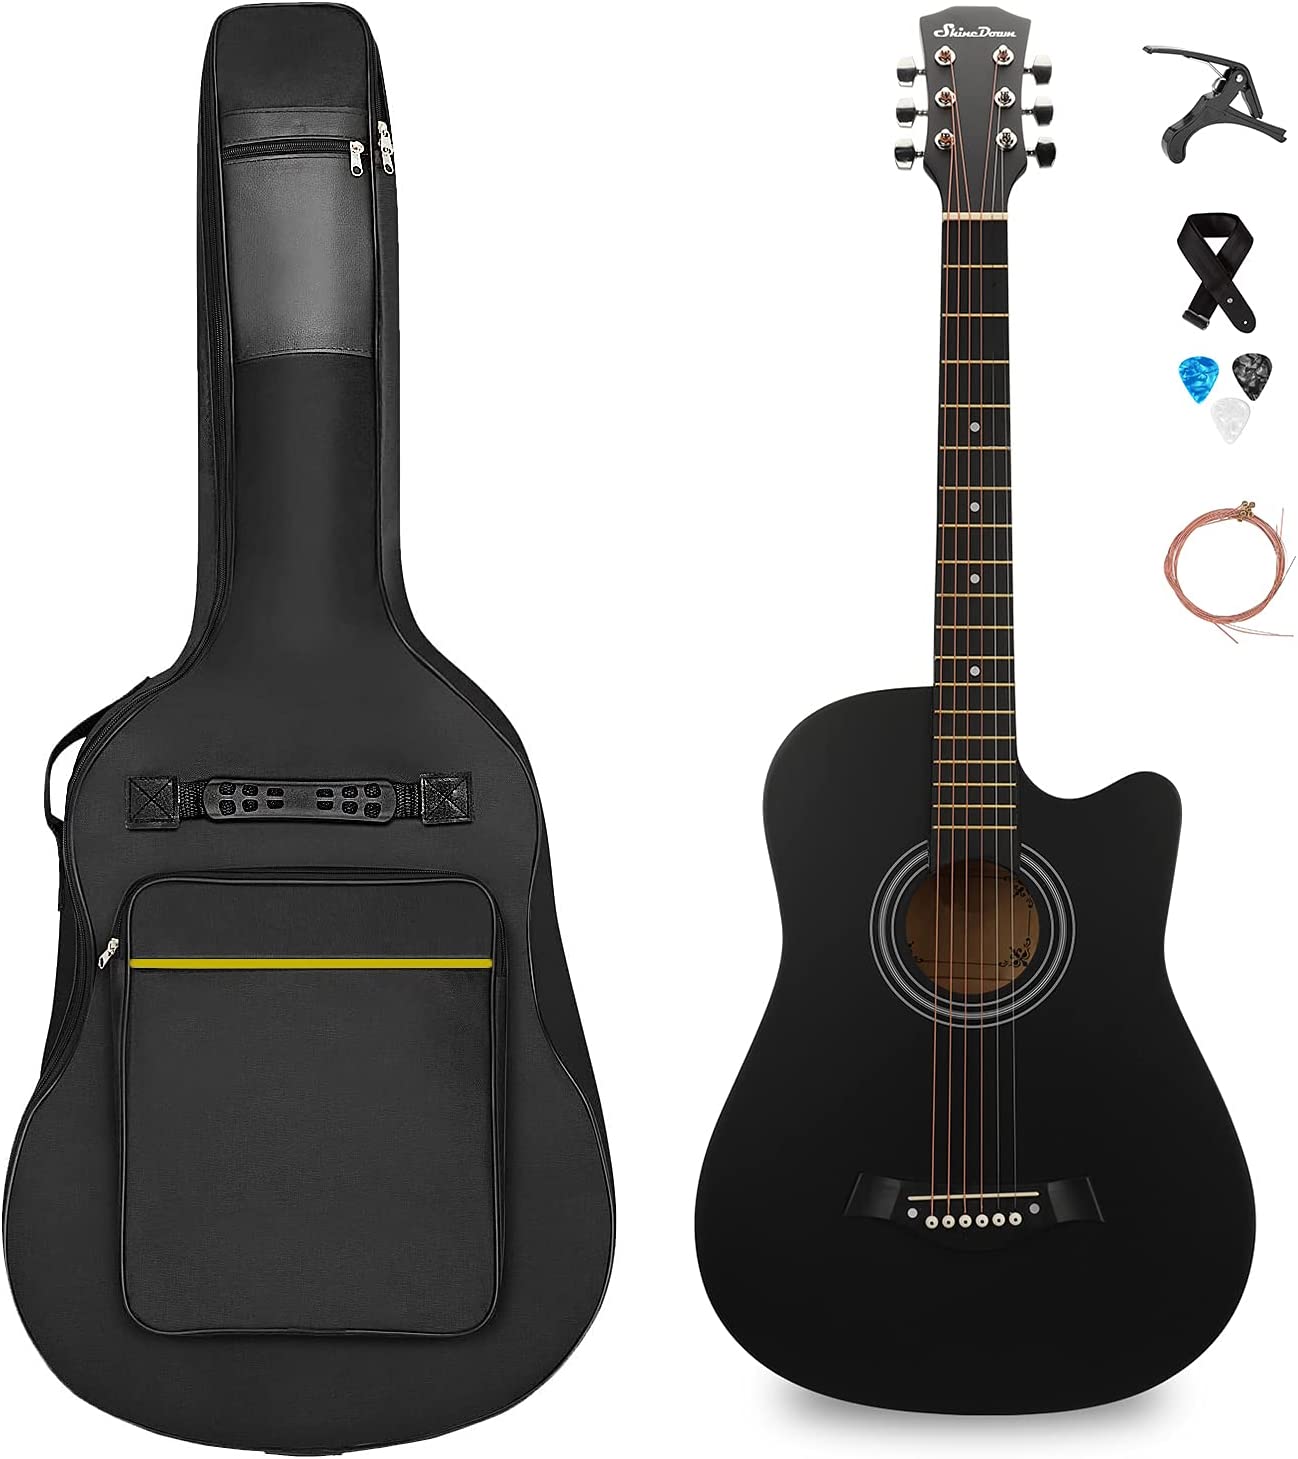 گیتار آکوستیک SHINEDOWN Acoustic Guitar in Full Size 38in - ارسال ۱۰ الی ۱۵ روز کاری